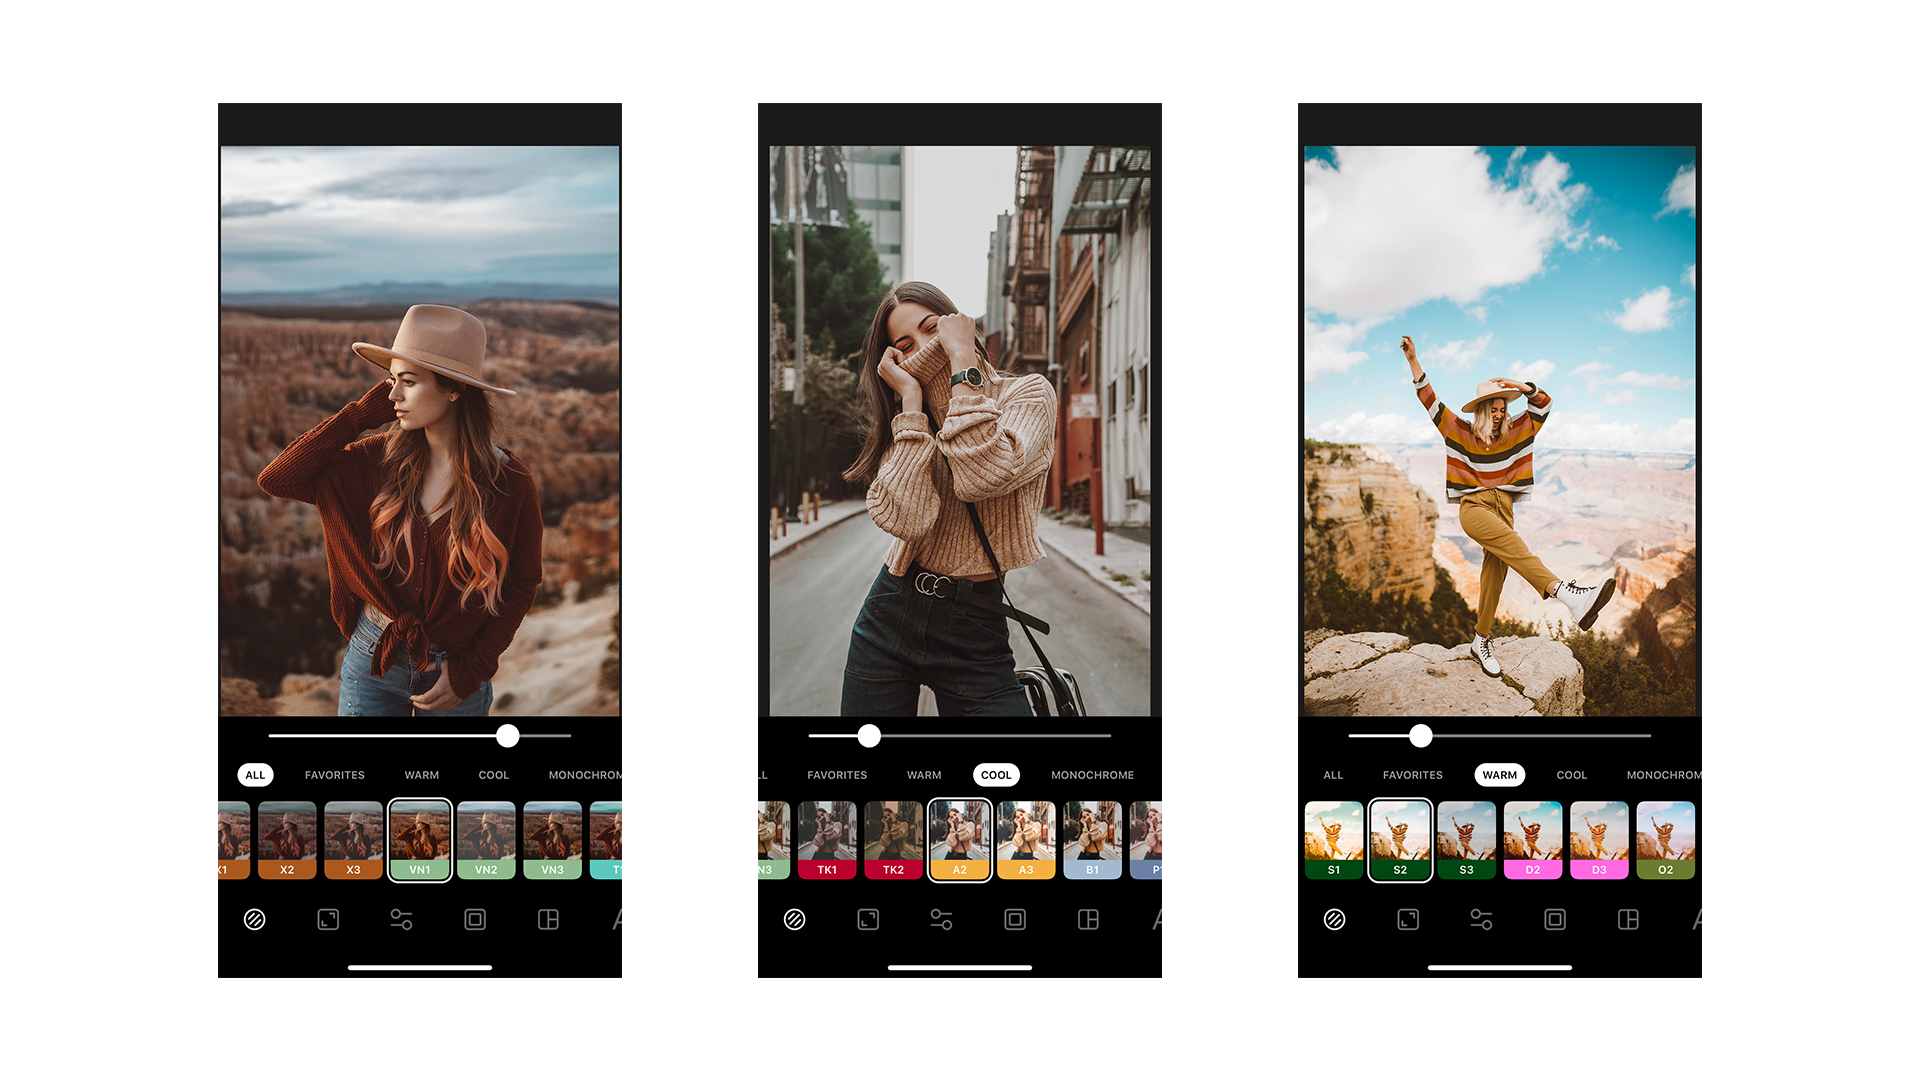 Instasize Instagram Photo Editing App